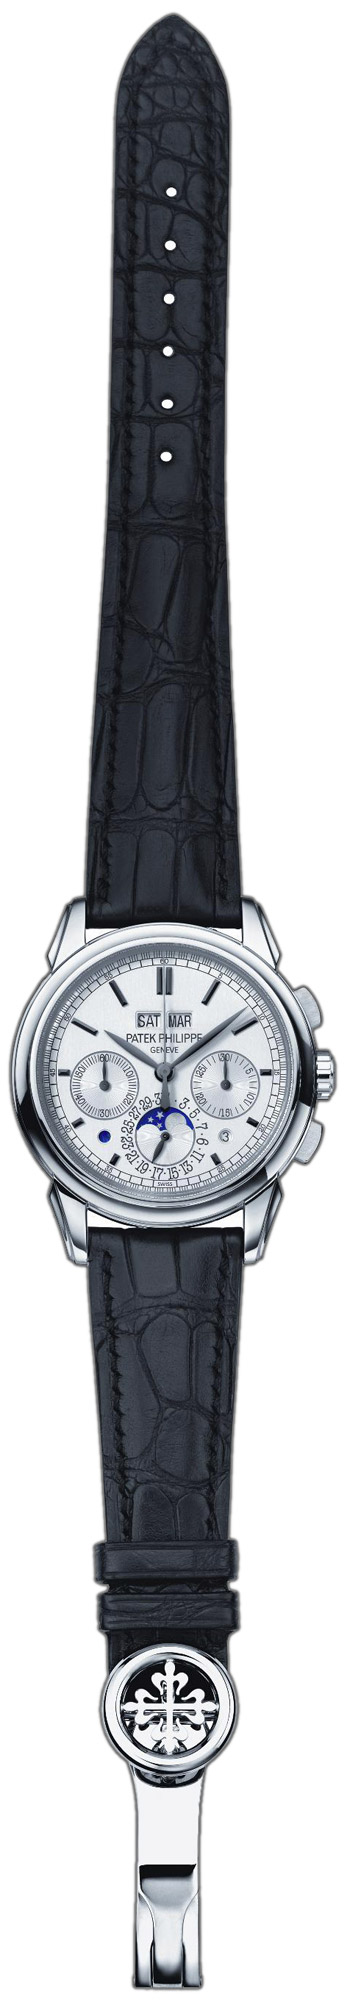 Patek Philippe Grand Complication Men's Watch Model 5270G Thumbnail 2